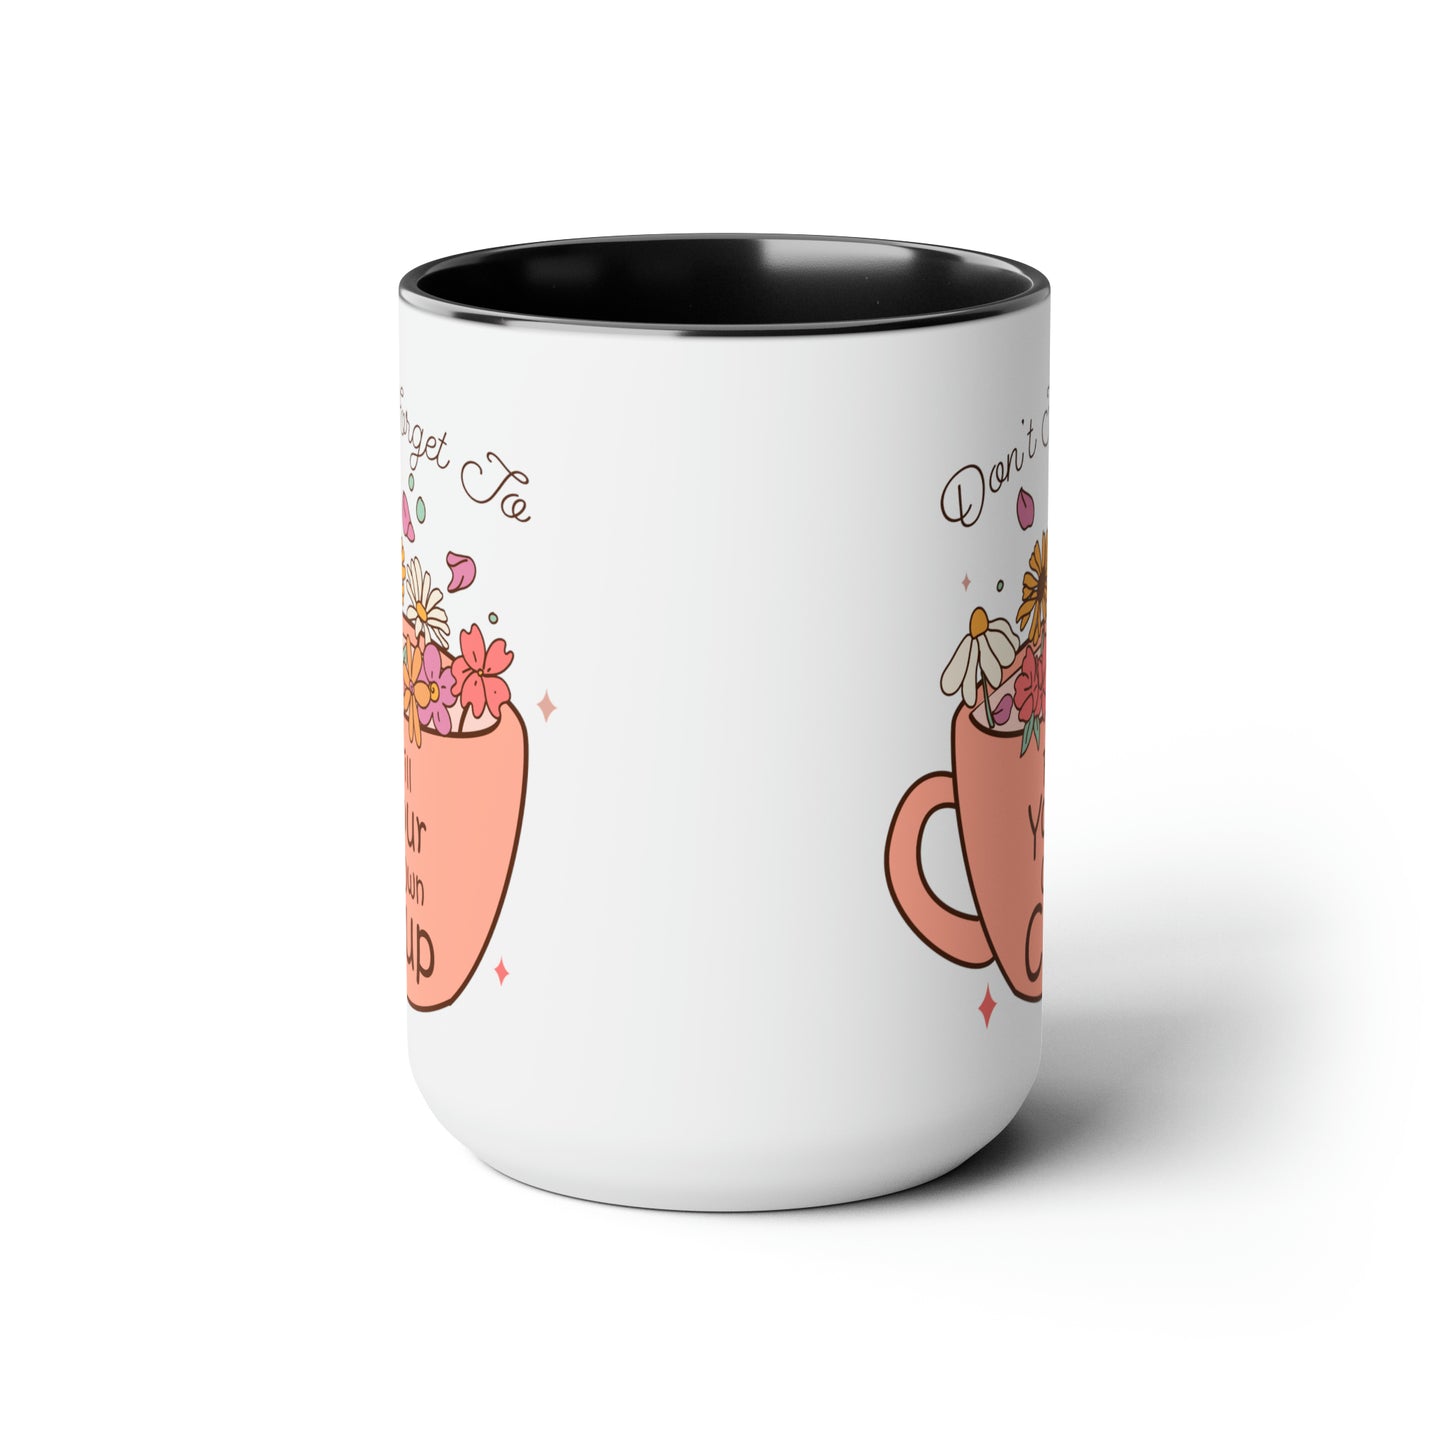 Fill Your Cup Two-Tone Coffee Mug, 15oz Printify Pikolelie (pee-koh-lay-lee) Activewear Mug